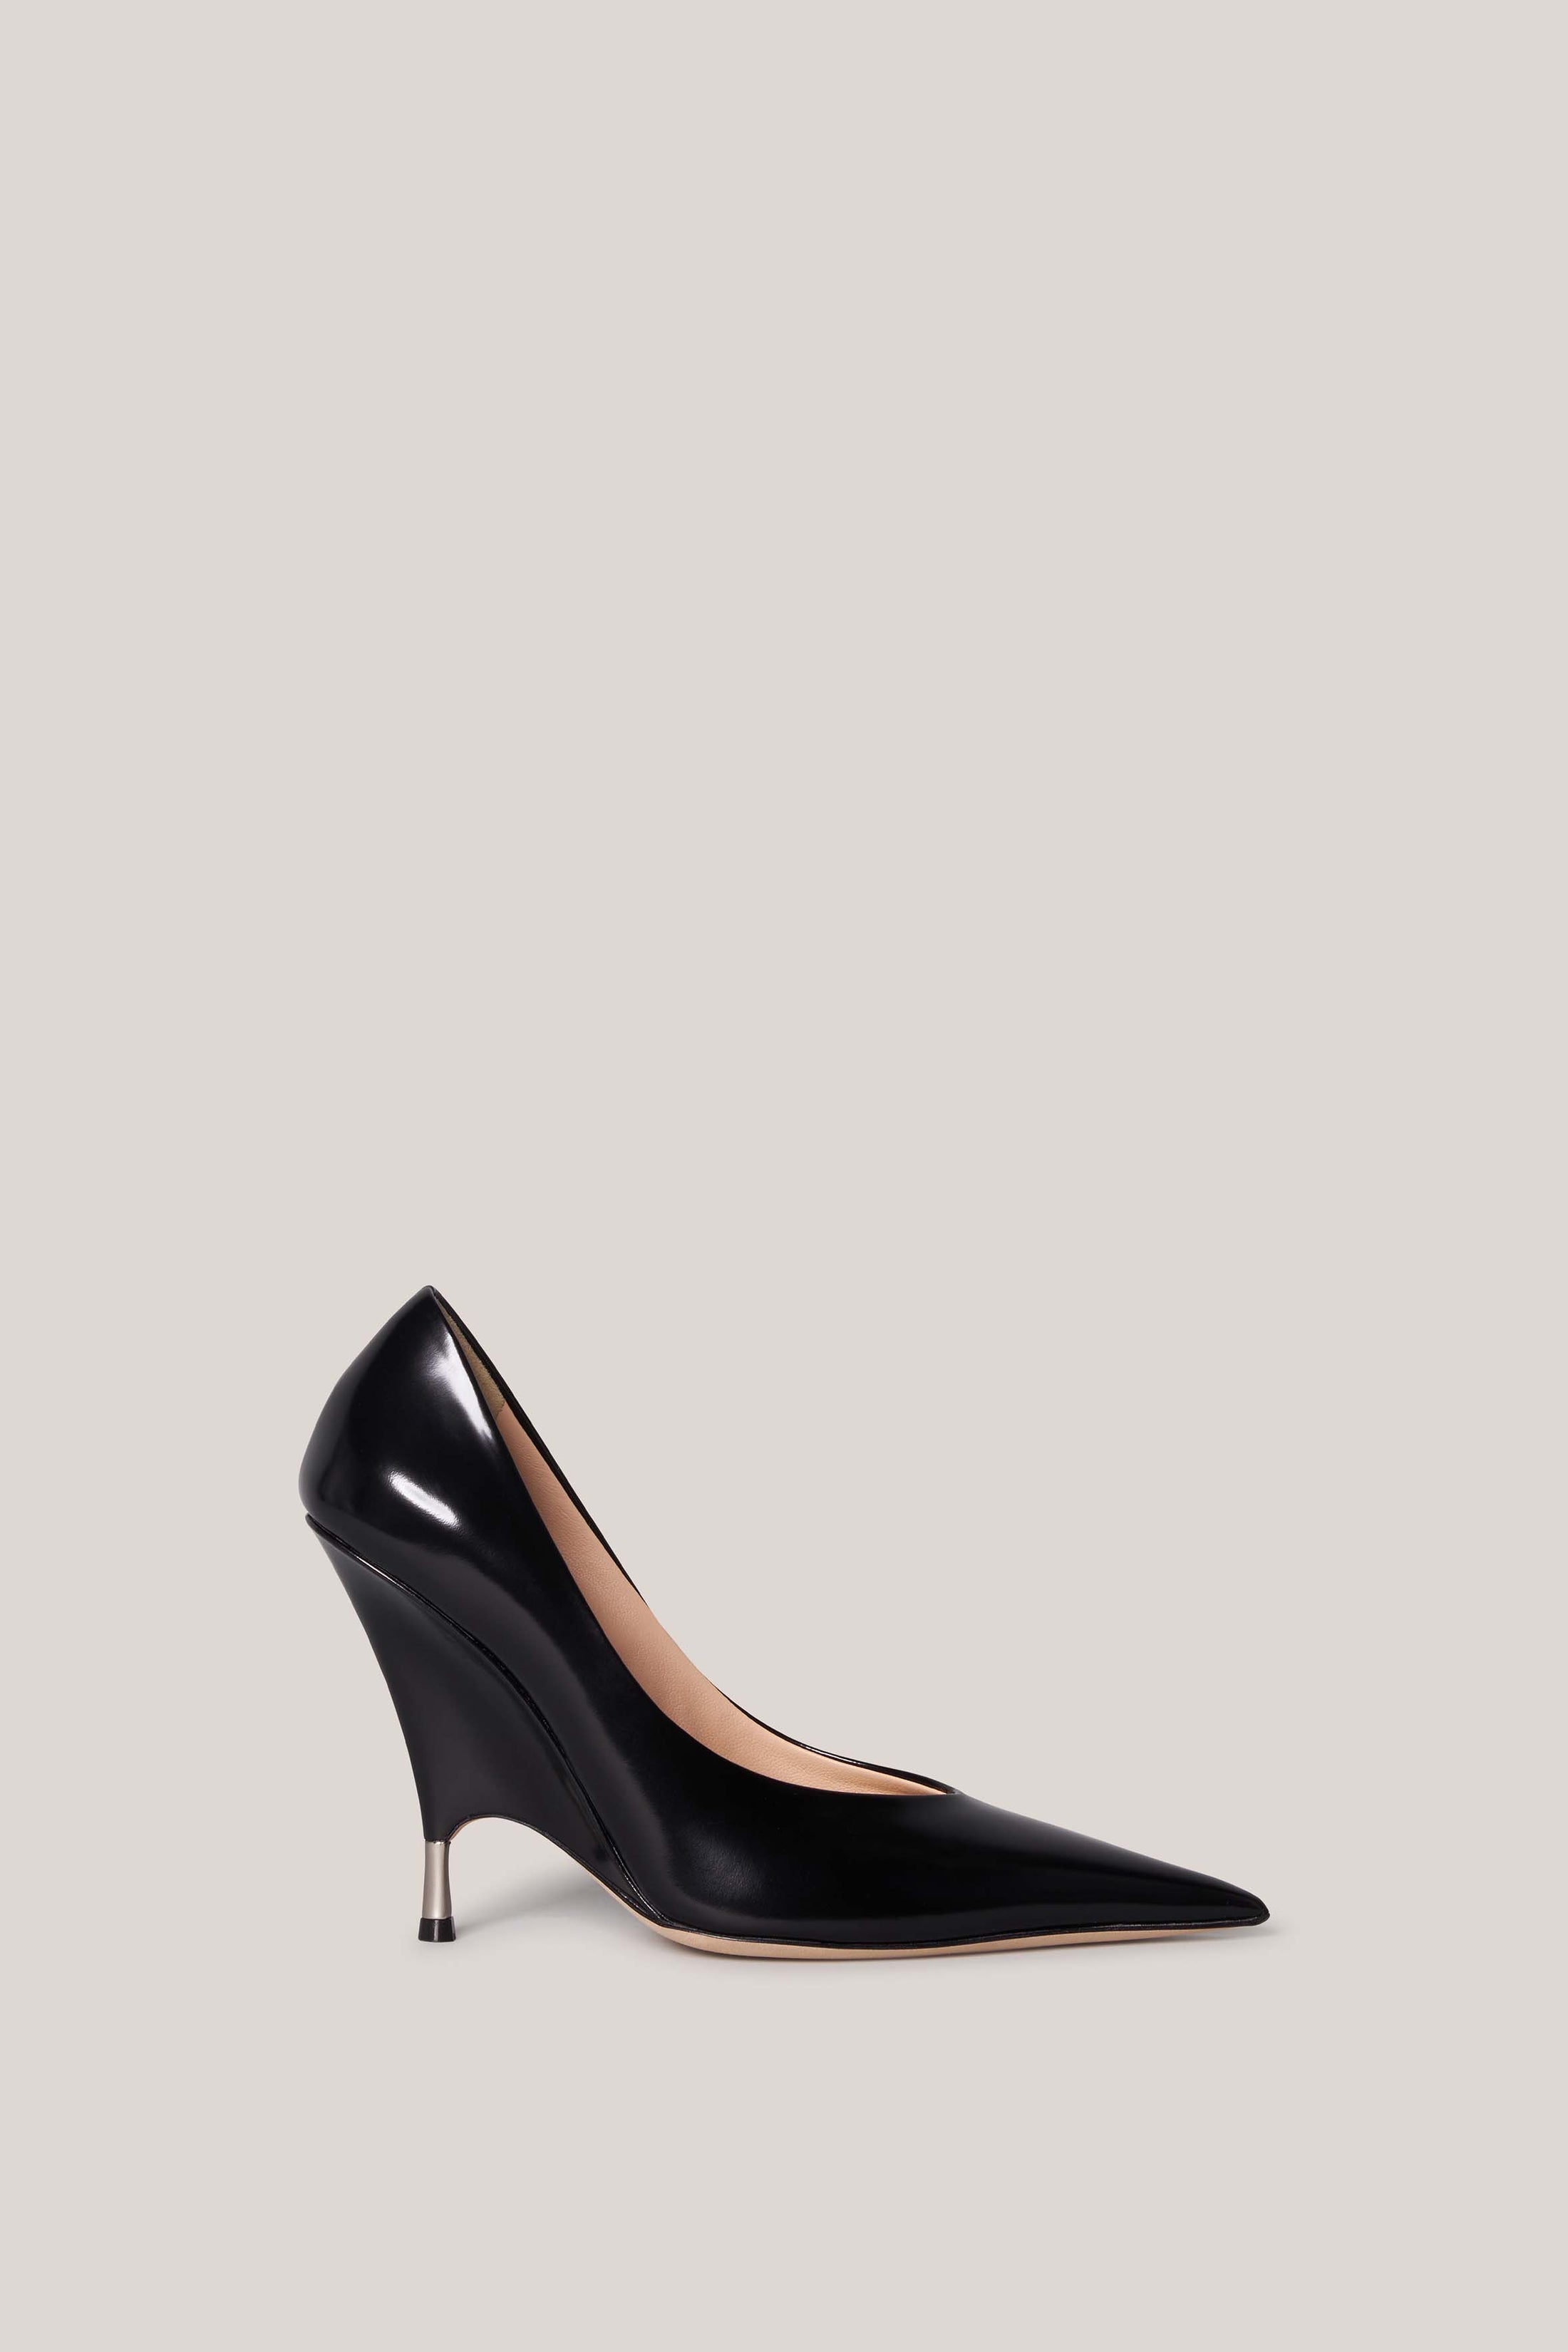 Louis Vuitton "Oh Really" Peep Toe Pump Shoes 39 US 9 black  patent